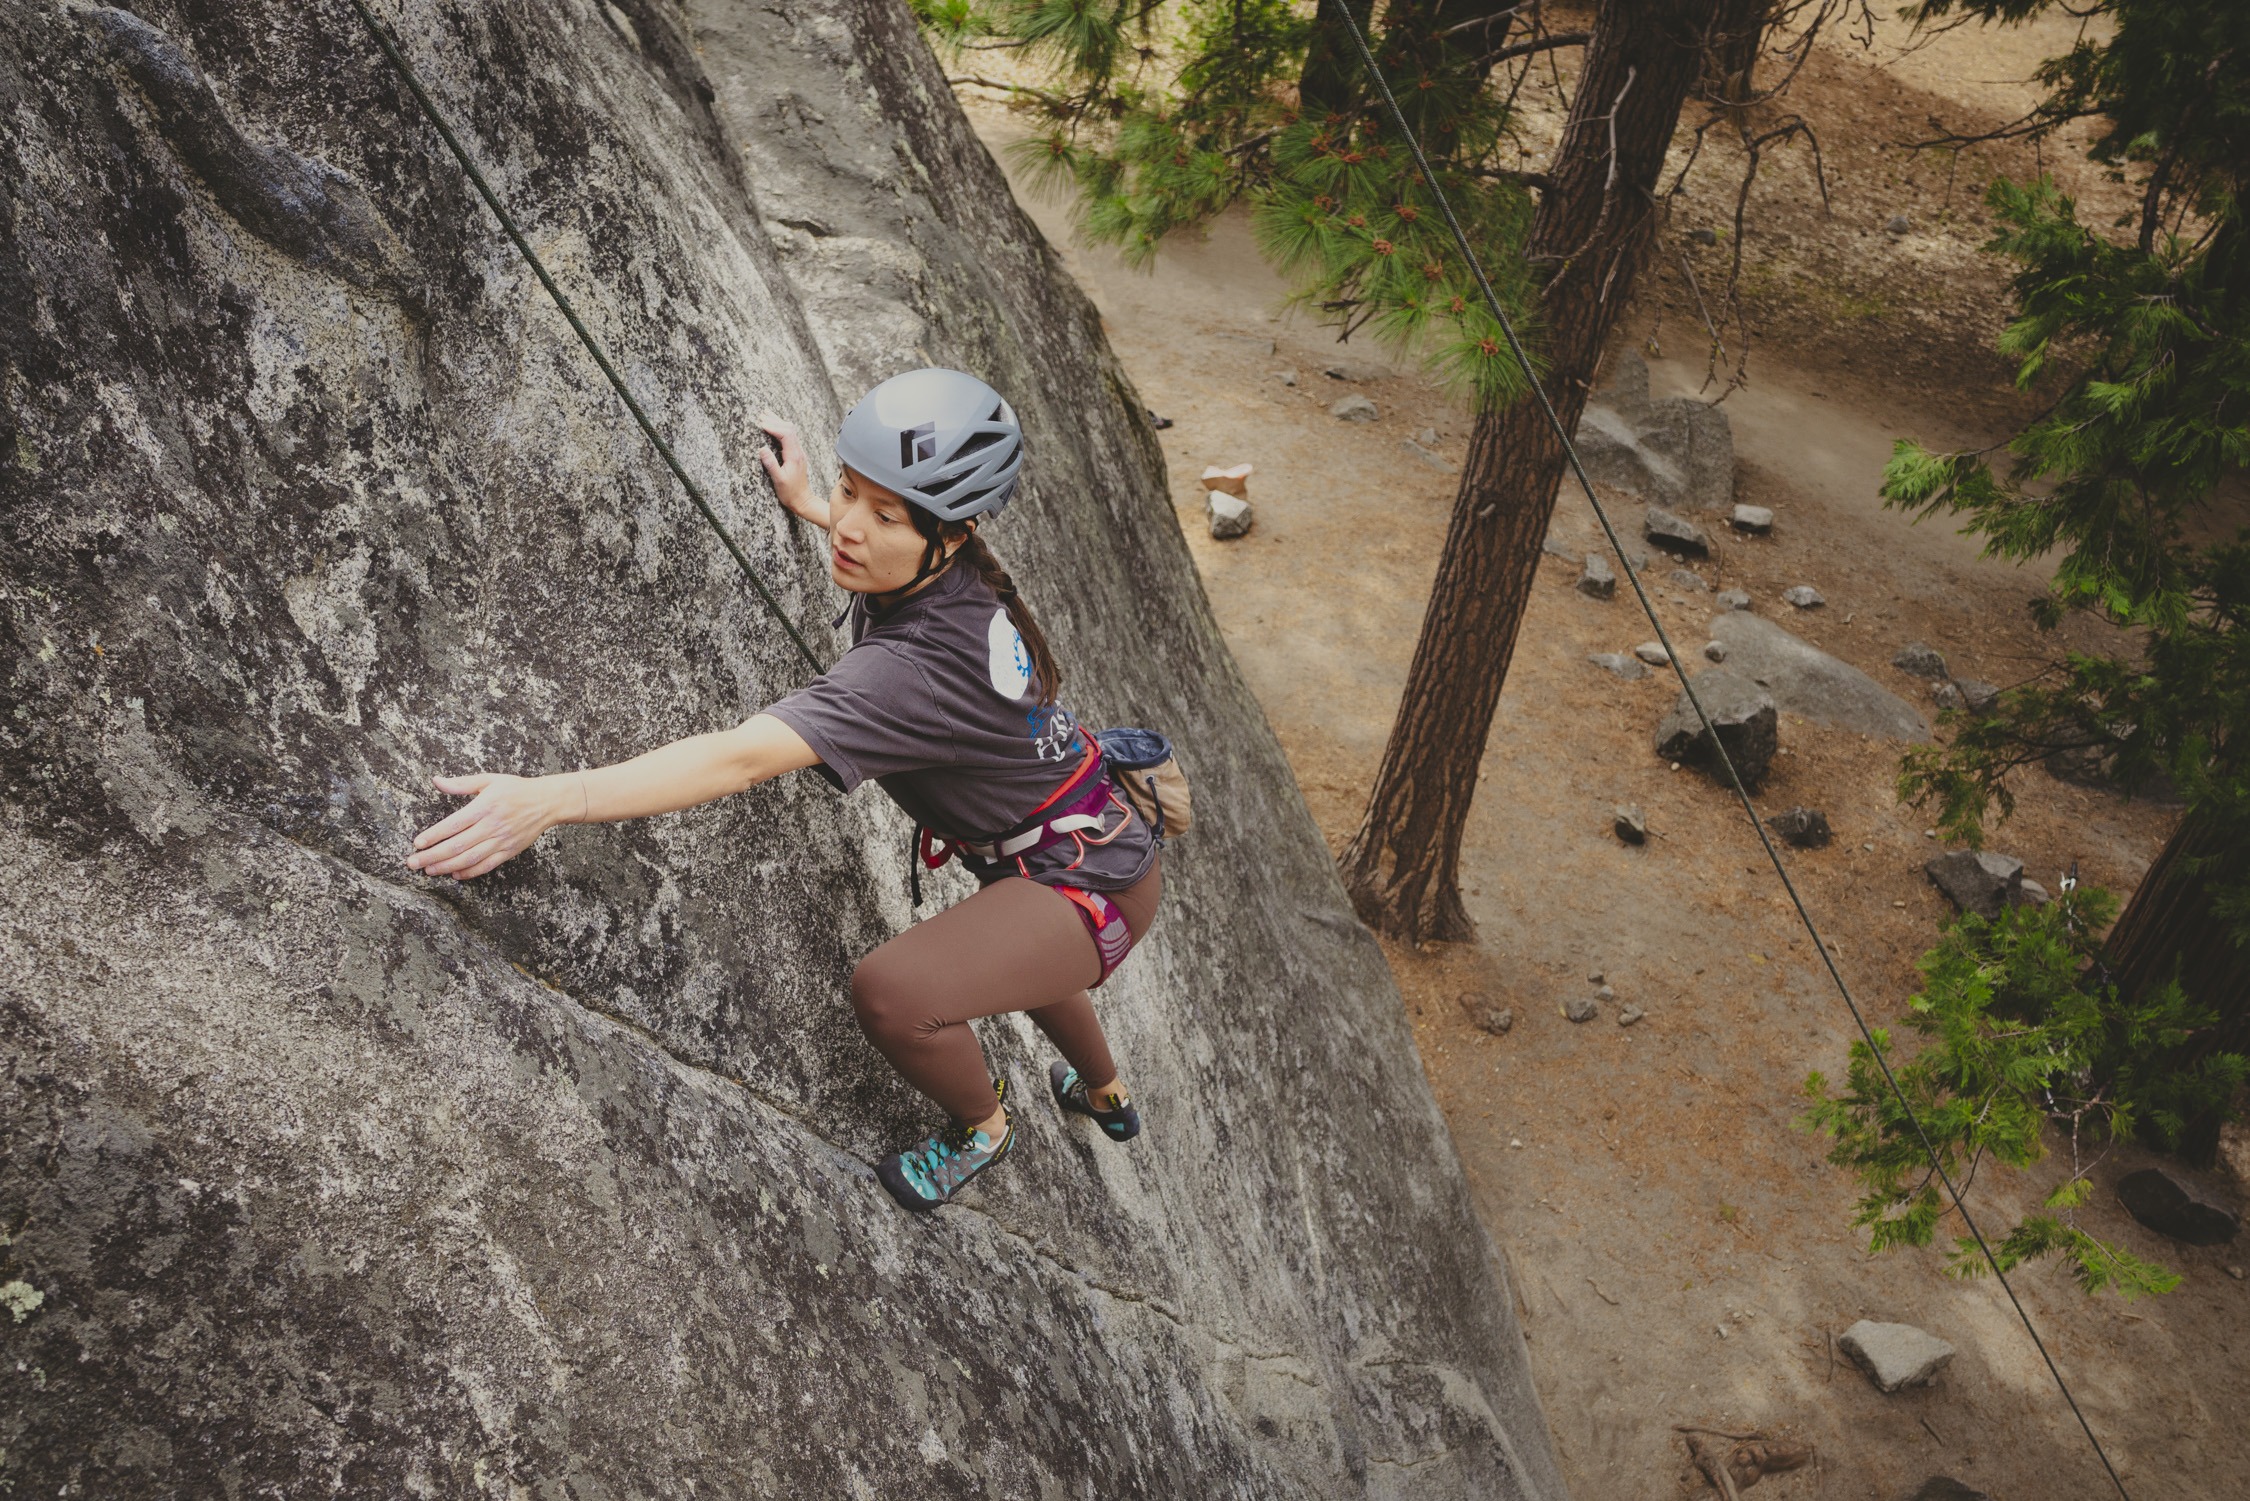 United in Yosemite climber scales the granite boulders in Yosemite Valley. Image by Miya Tsudome.